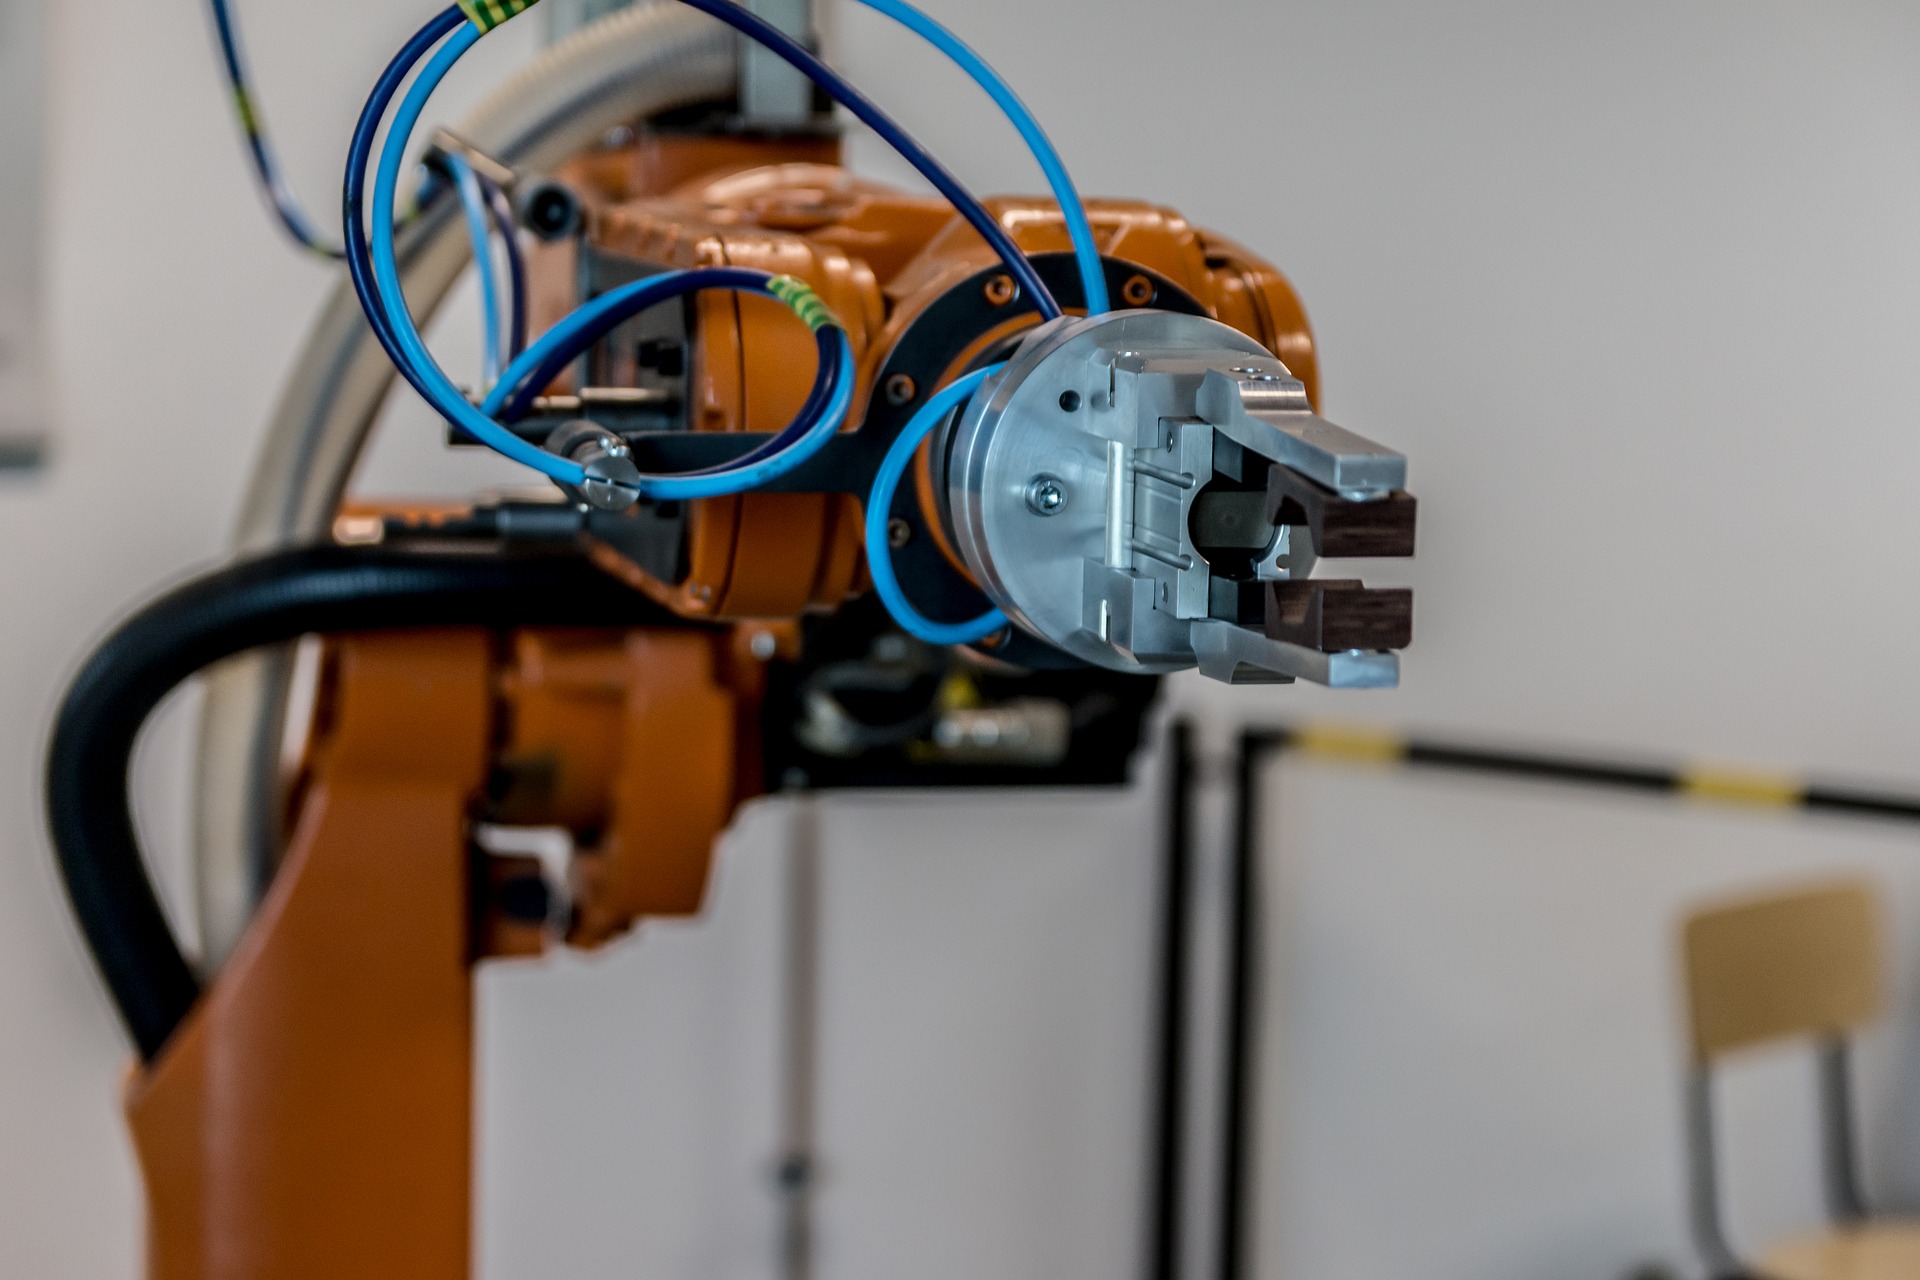 Rob-LPI Robot arm industry